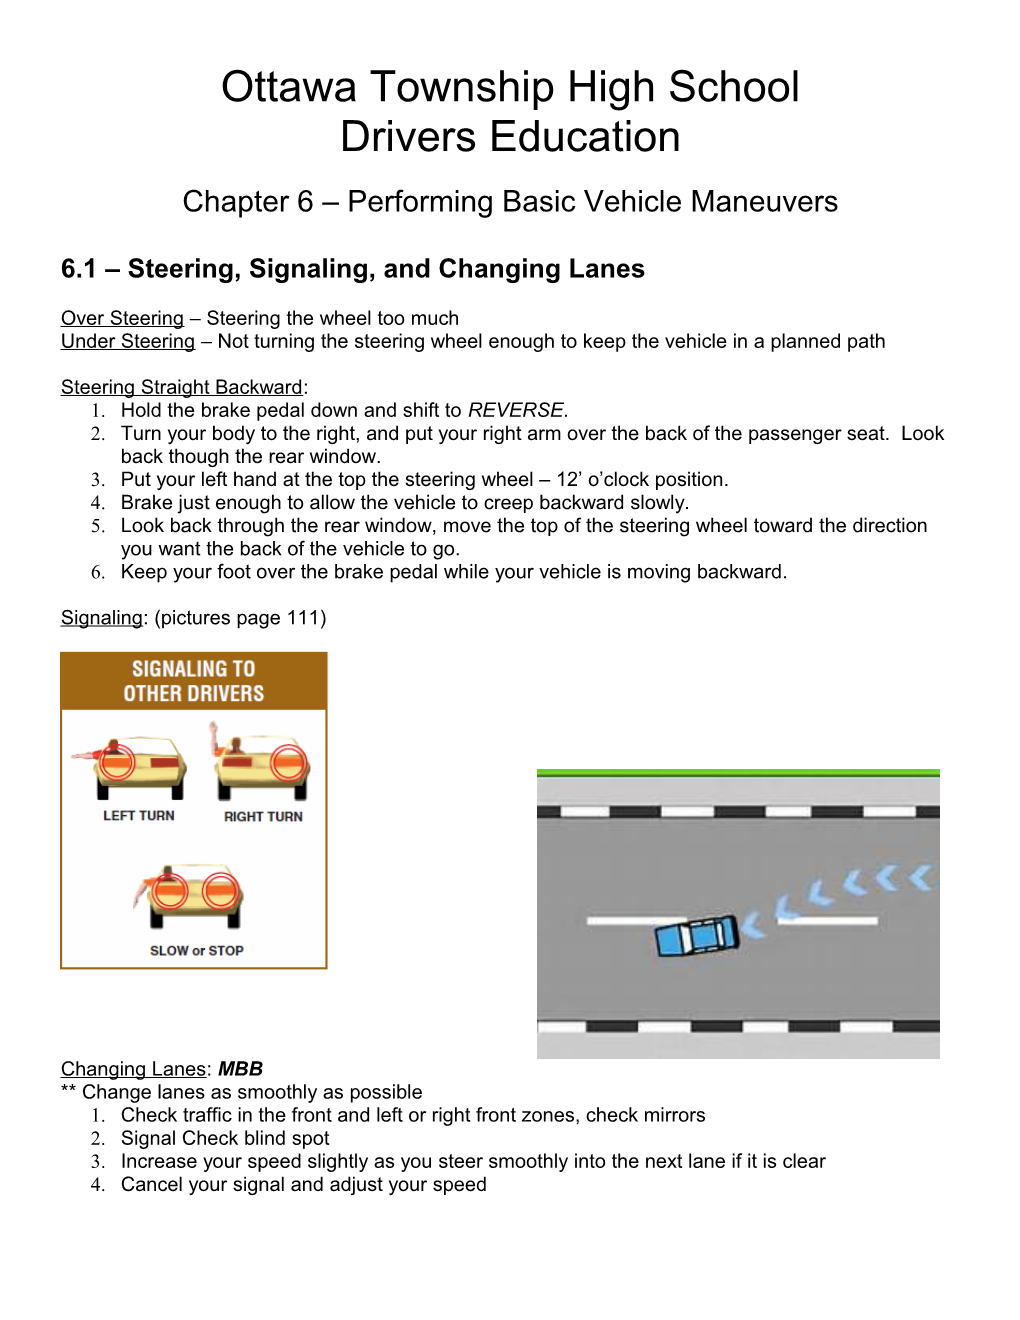 6.1 Steering, Signaling, and Changing Lanes